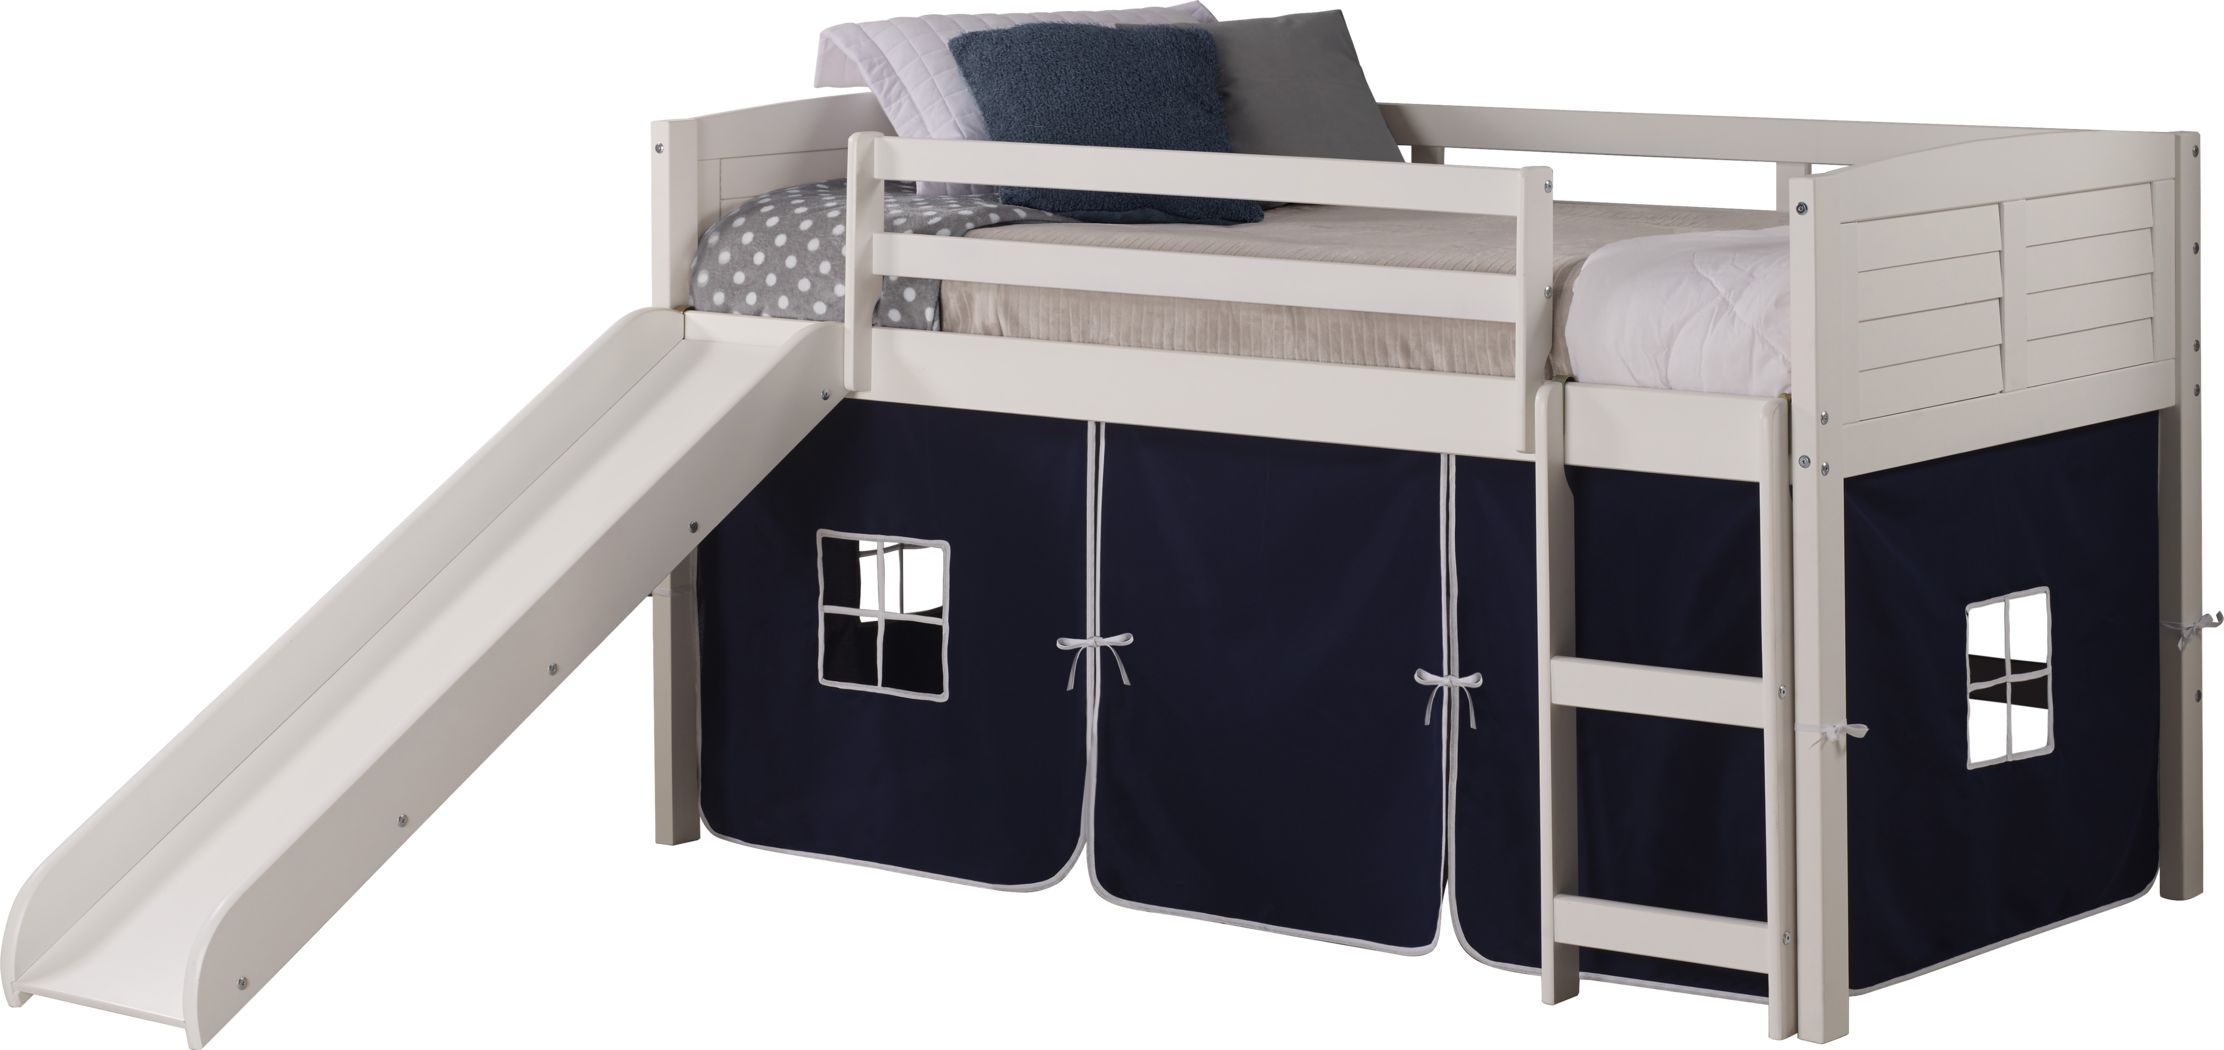 Junior Loft Bed Tent Idardarjisamaj Com, Twin Bunk Bed Tent